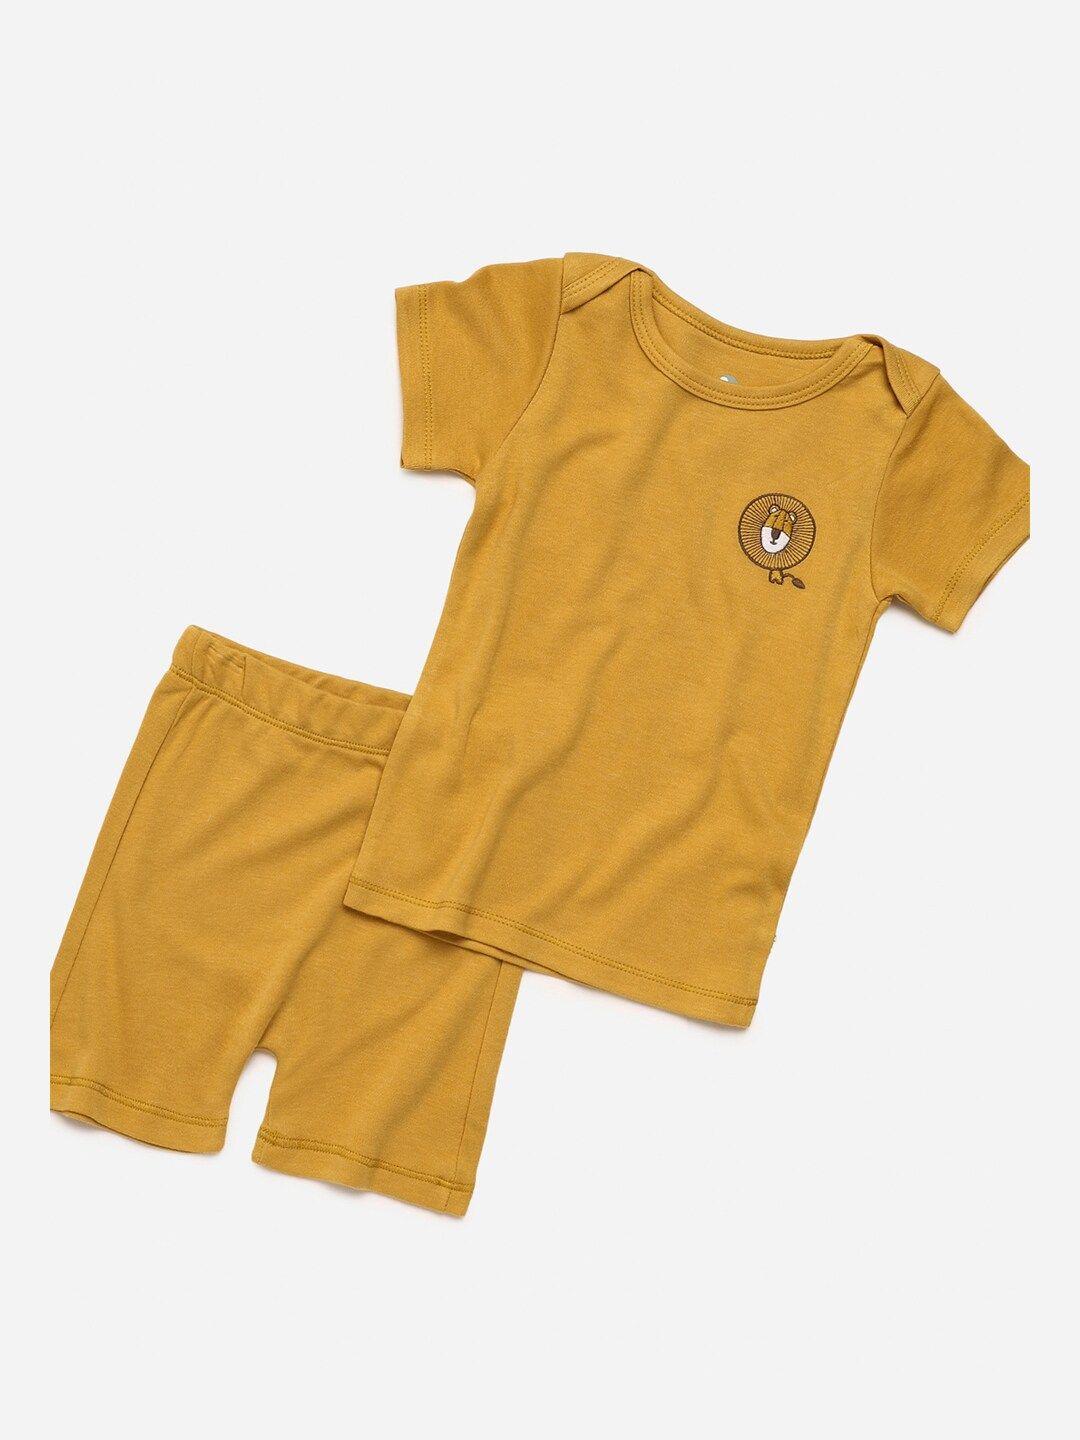 cocoon care unisex kids mustard sustainable clothing set